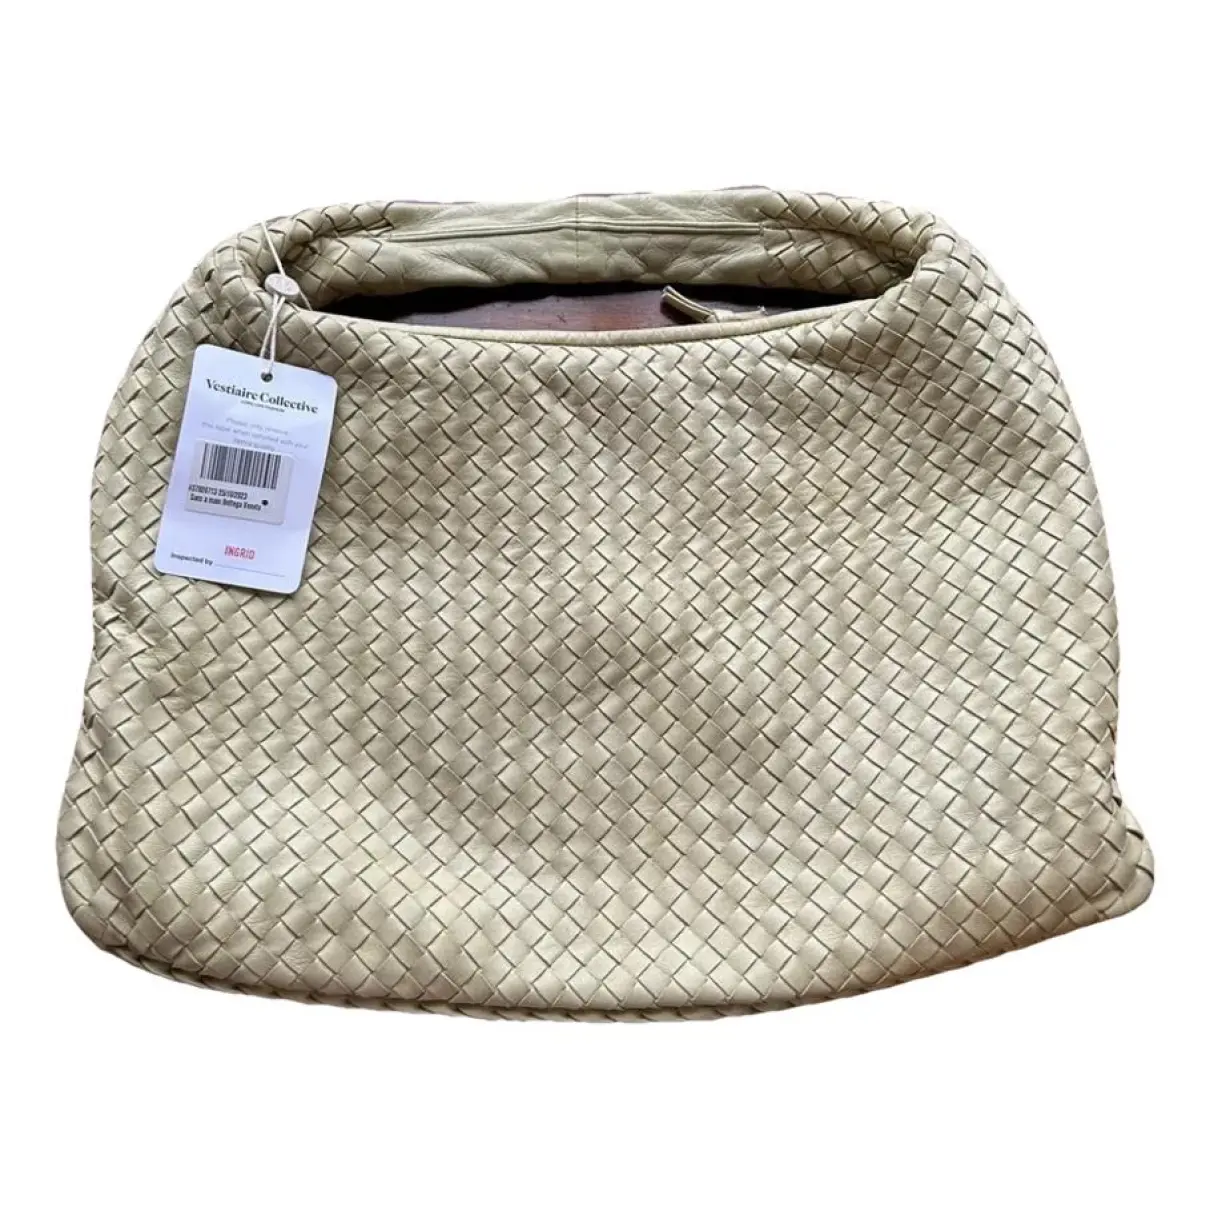 Veneta Leather Handbag